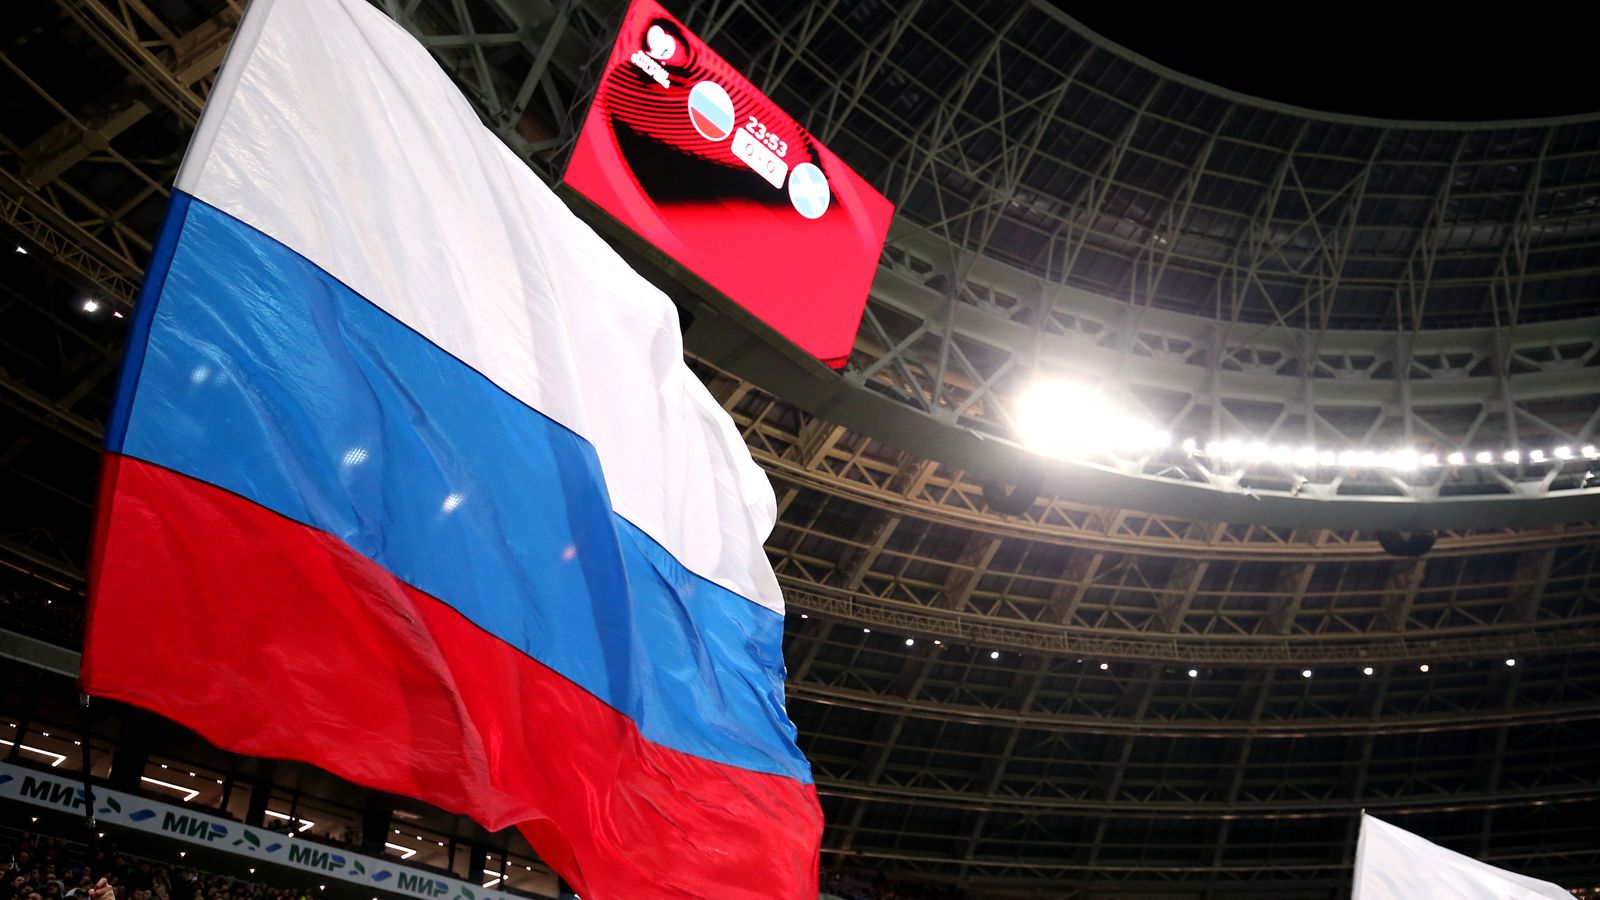 Three UEFA vice presidents opposed ending blanket ban on Russia teams